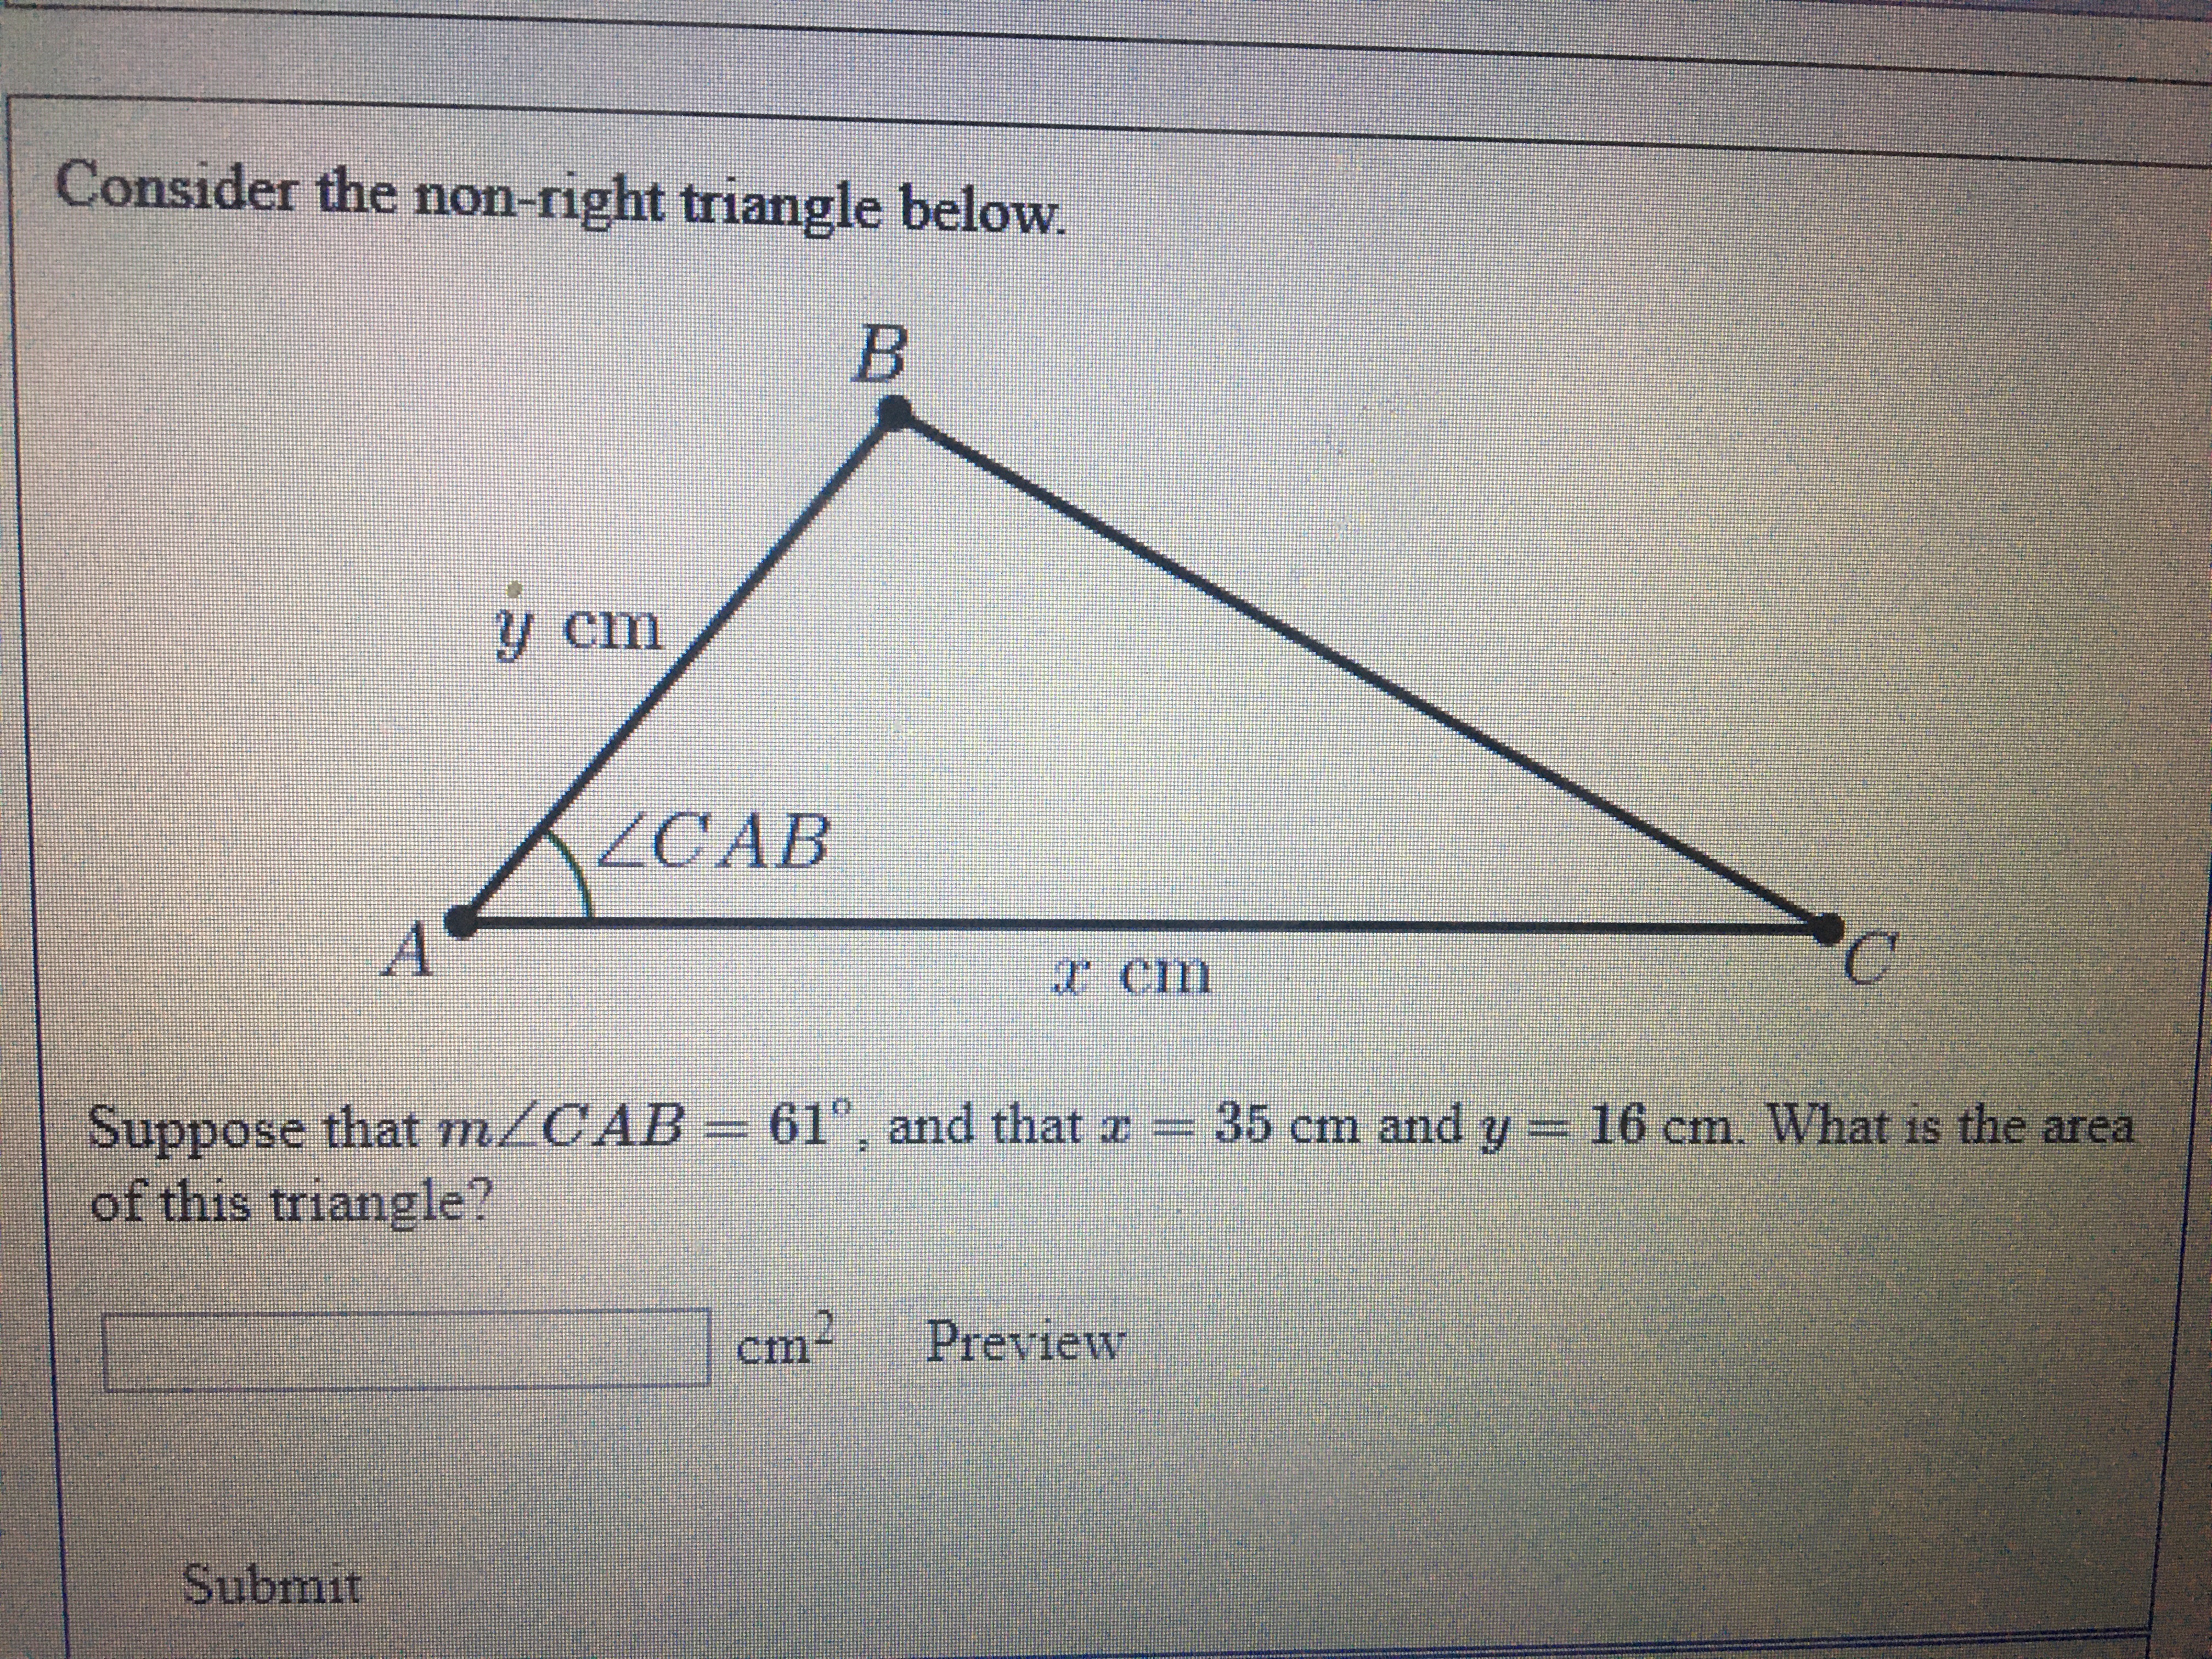 isosceles acute triangle act with ac=ct